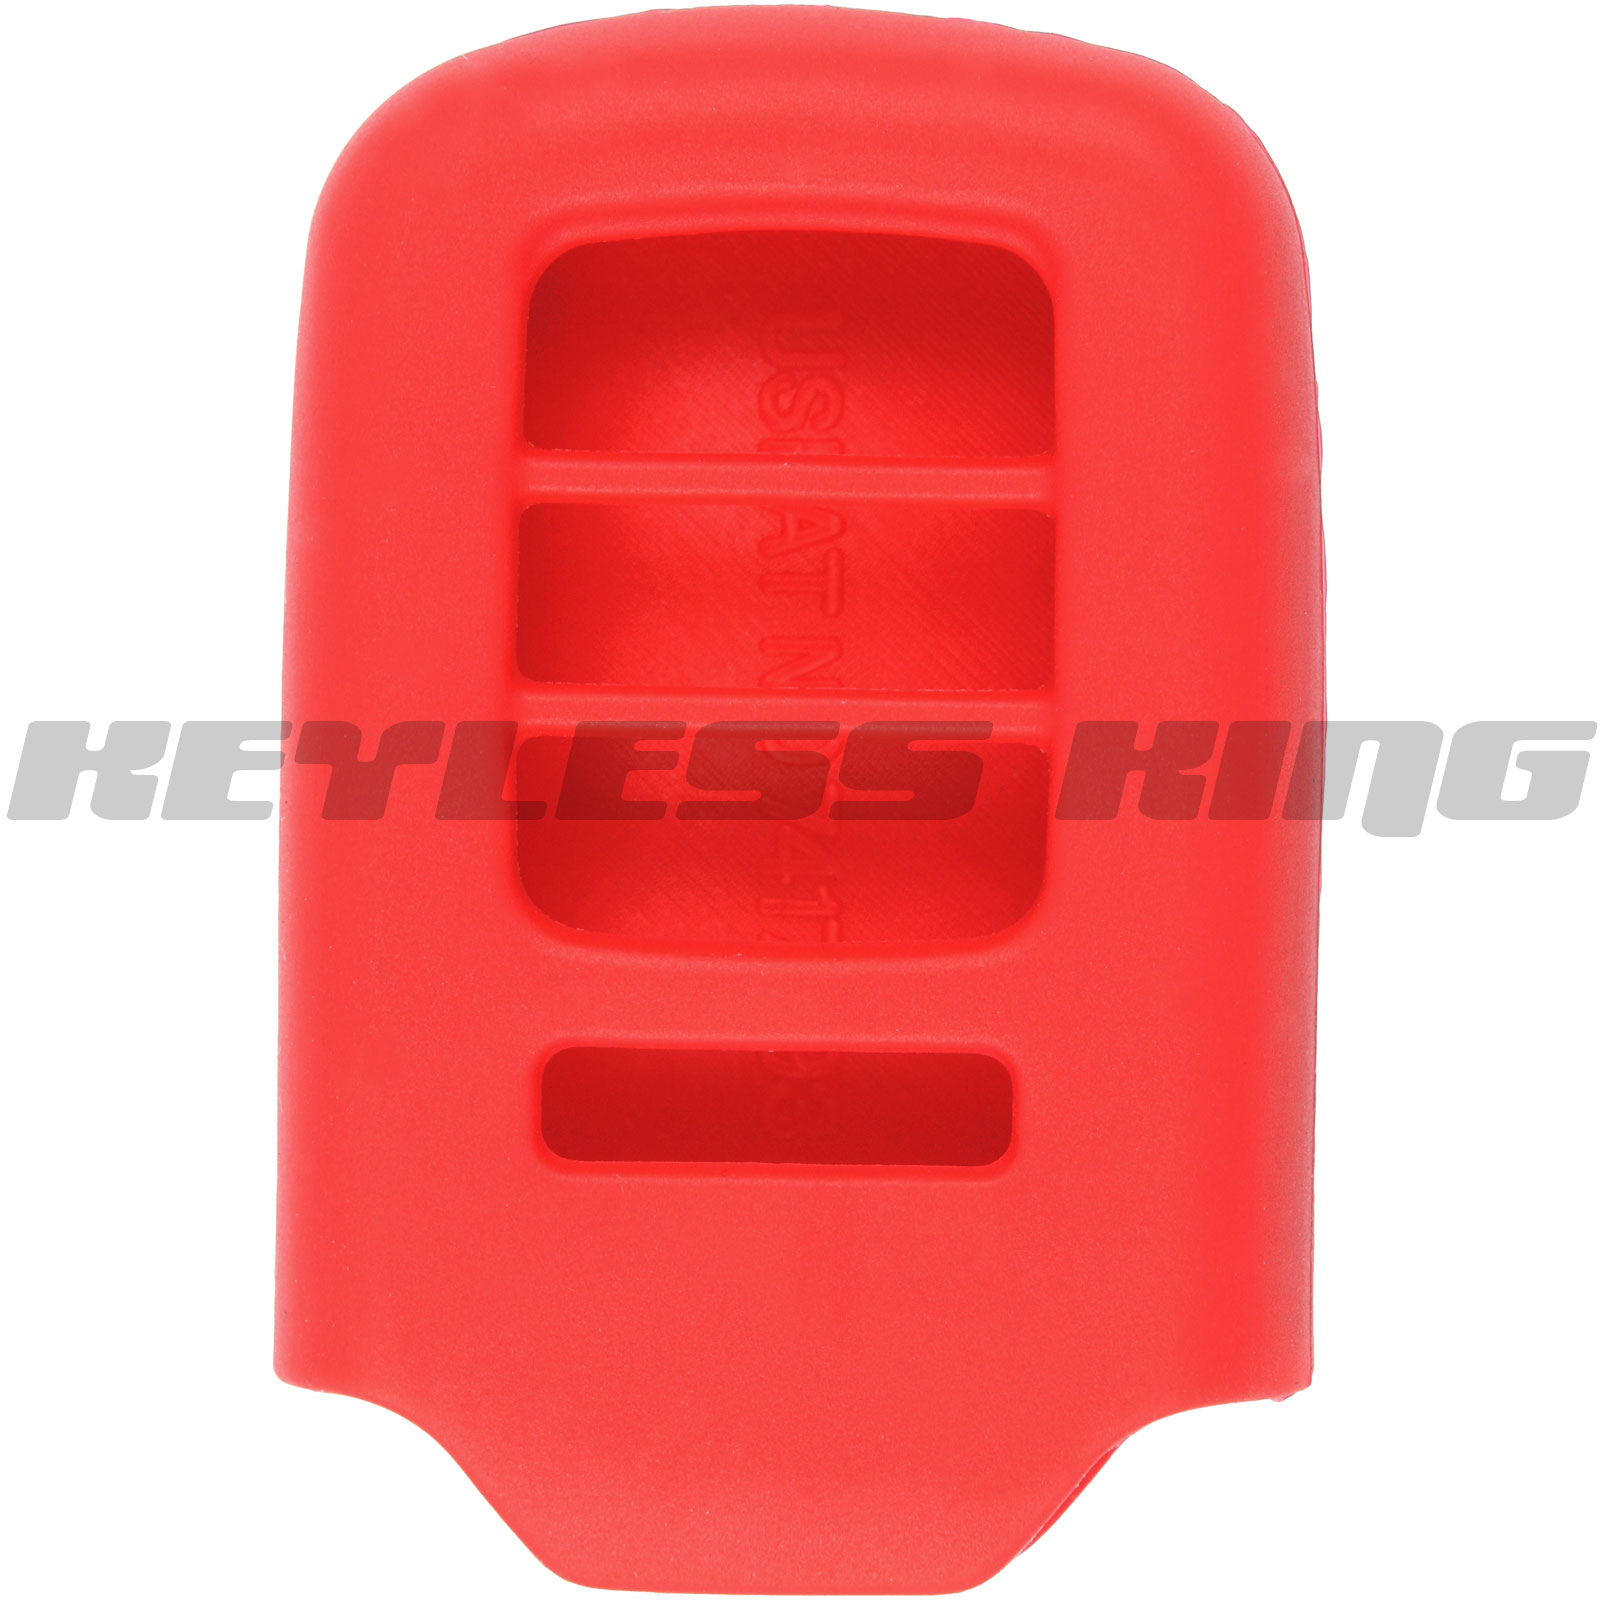 New Red 2013 Honda Accord Keyless Remote Key Fob Case Skin Jacket Cover Gel